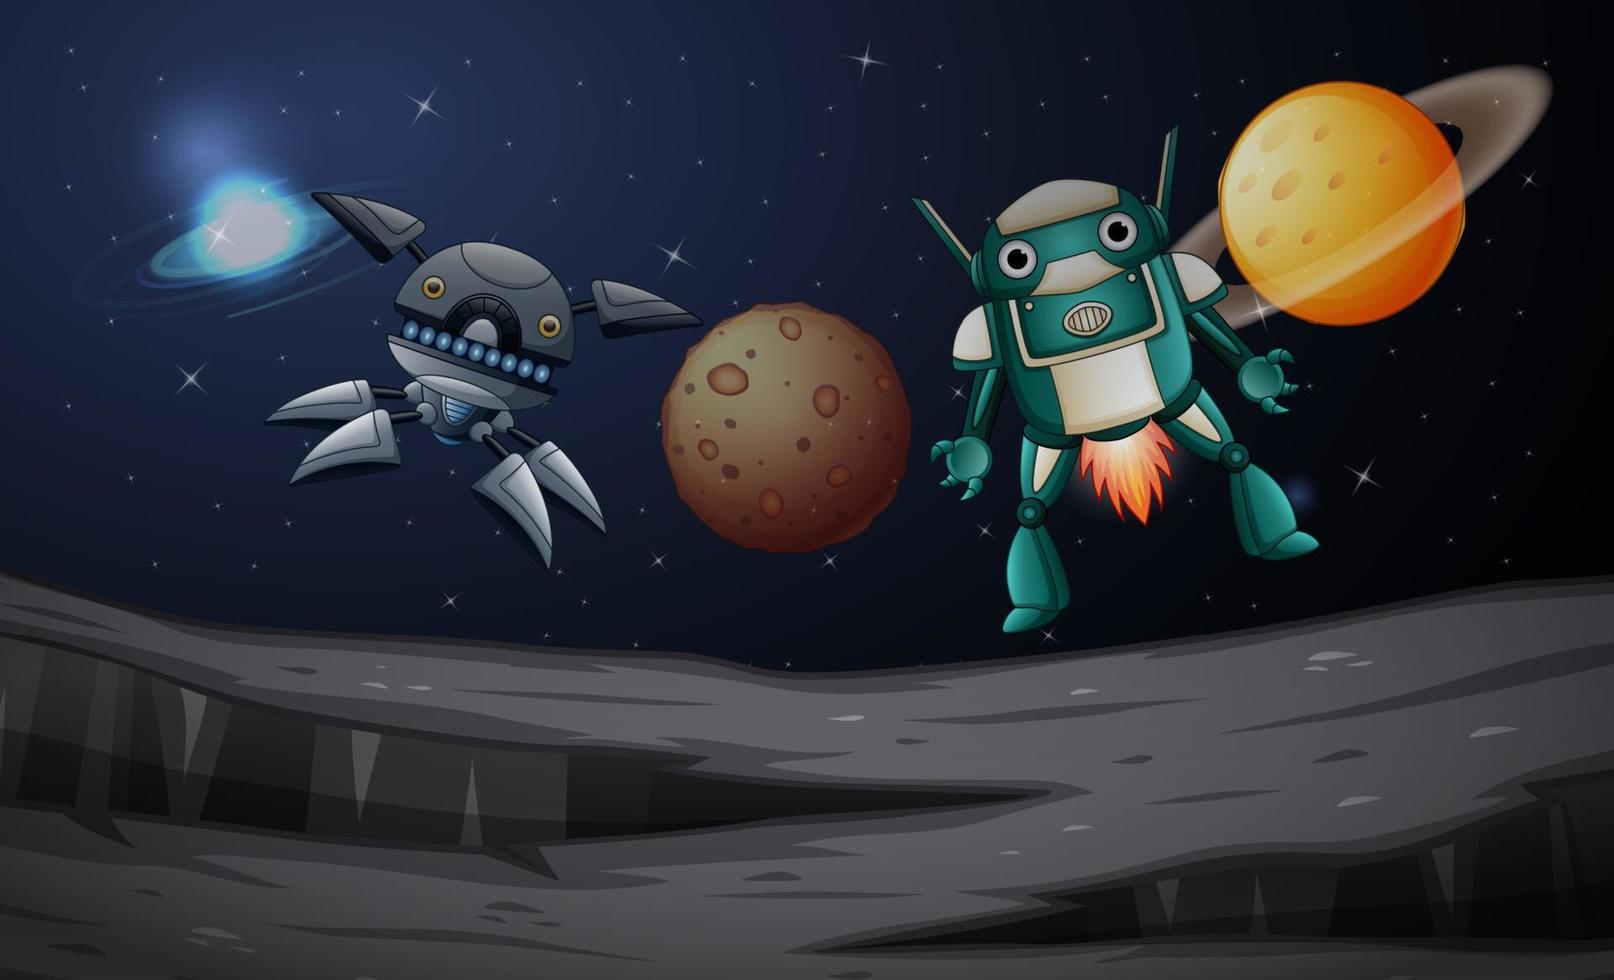 Space robots explore on planet illustration vector